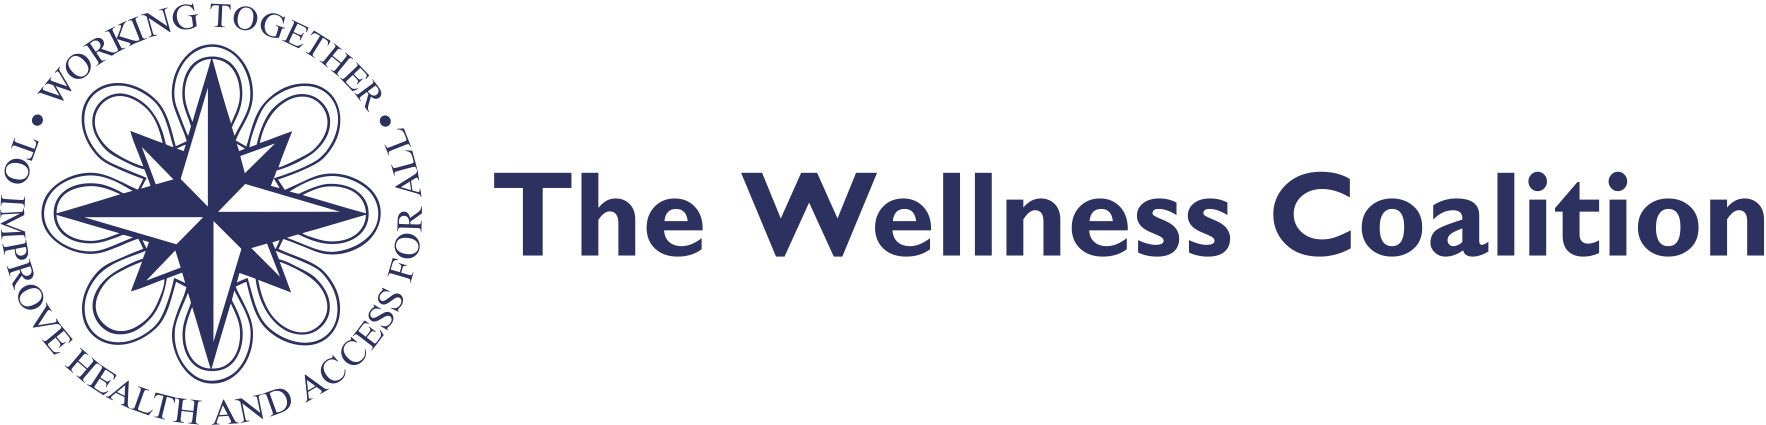 The Wellness Coalition 